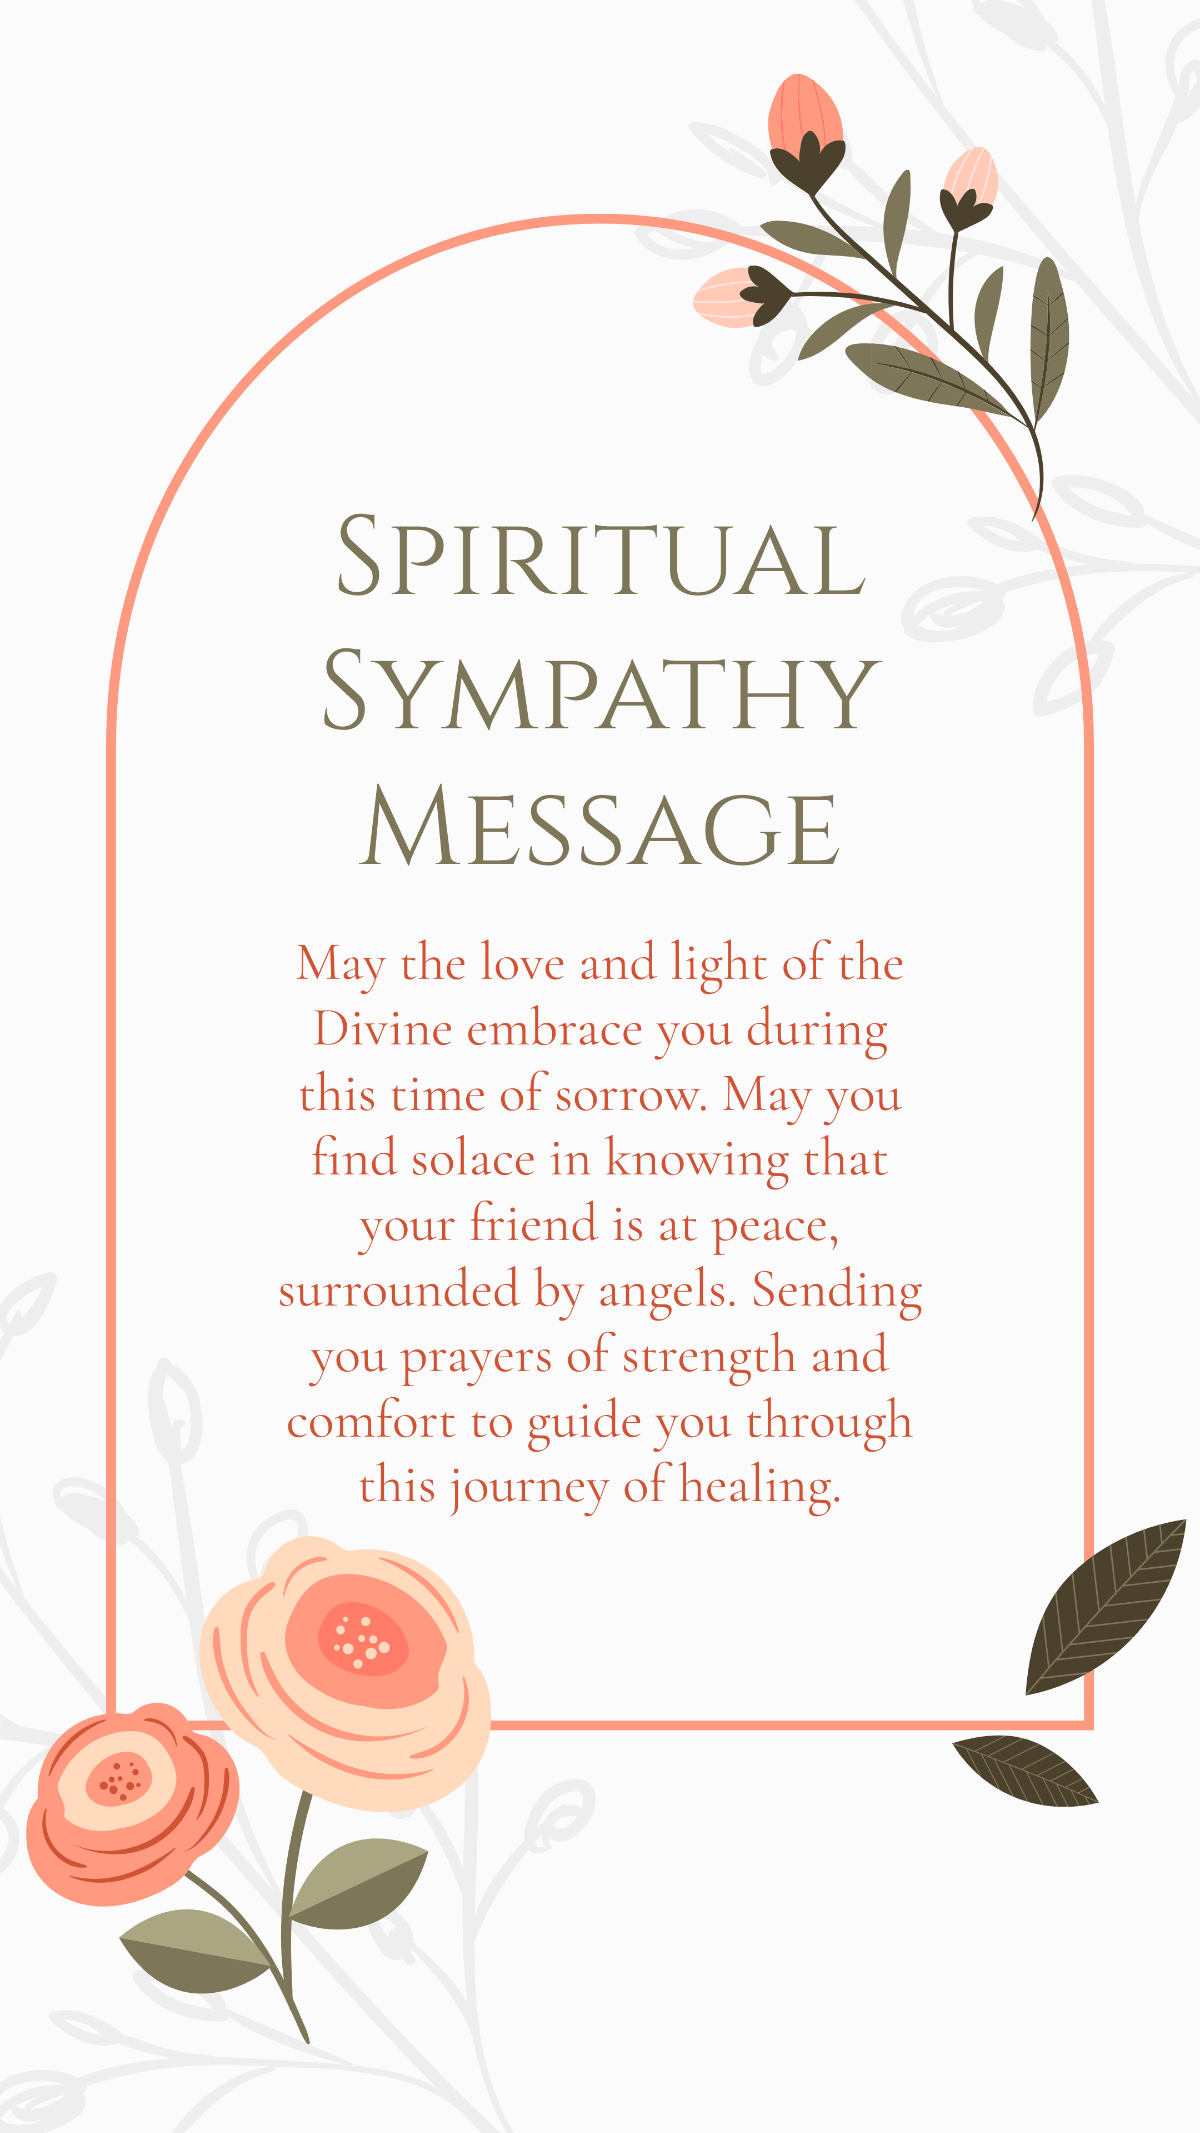 Spiritual sympathy message